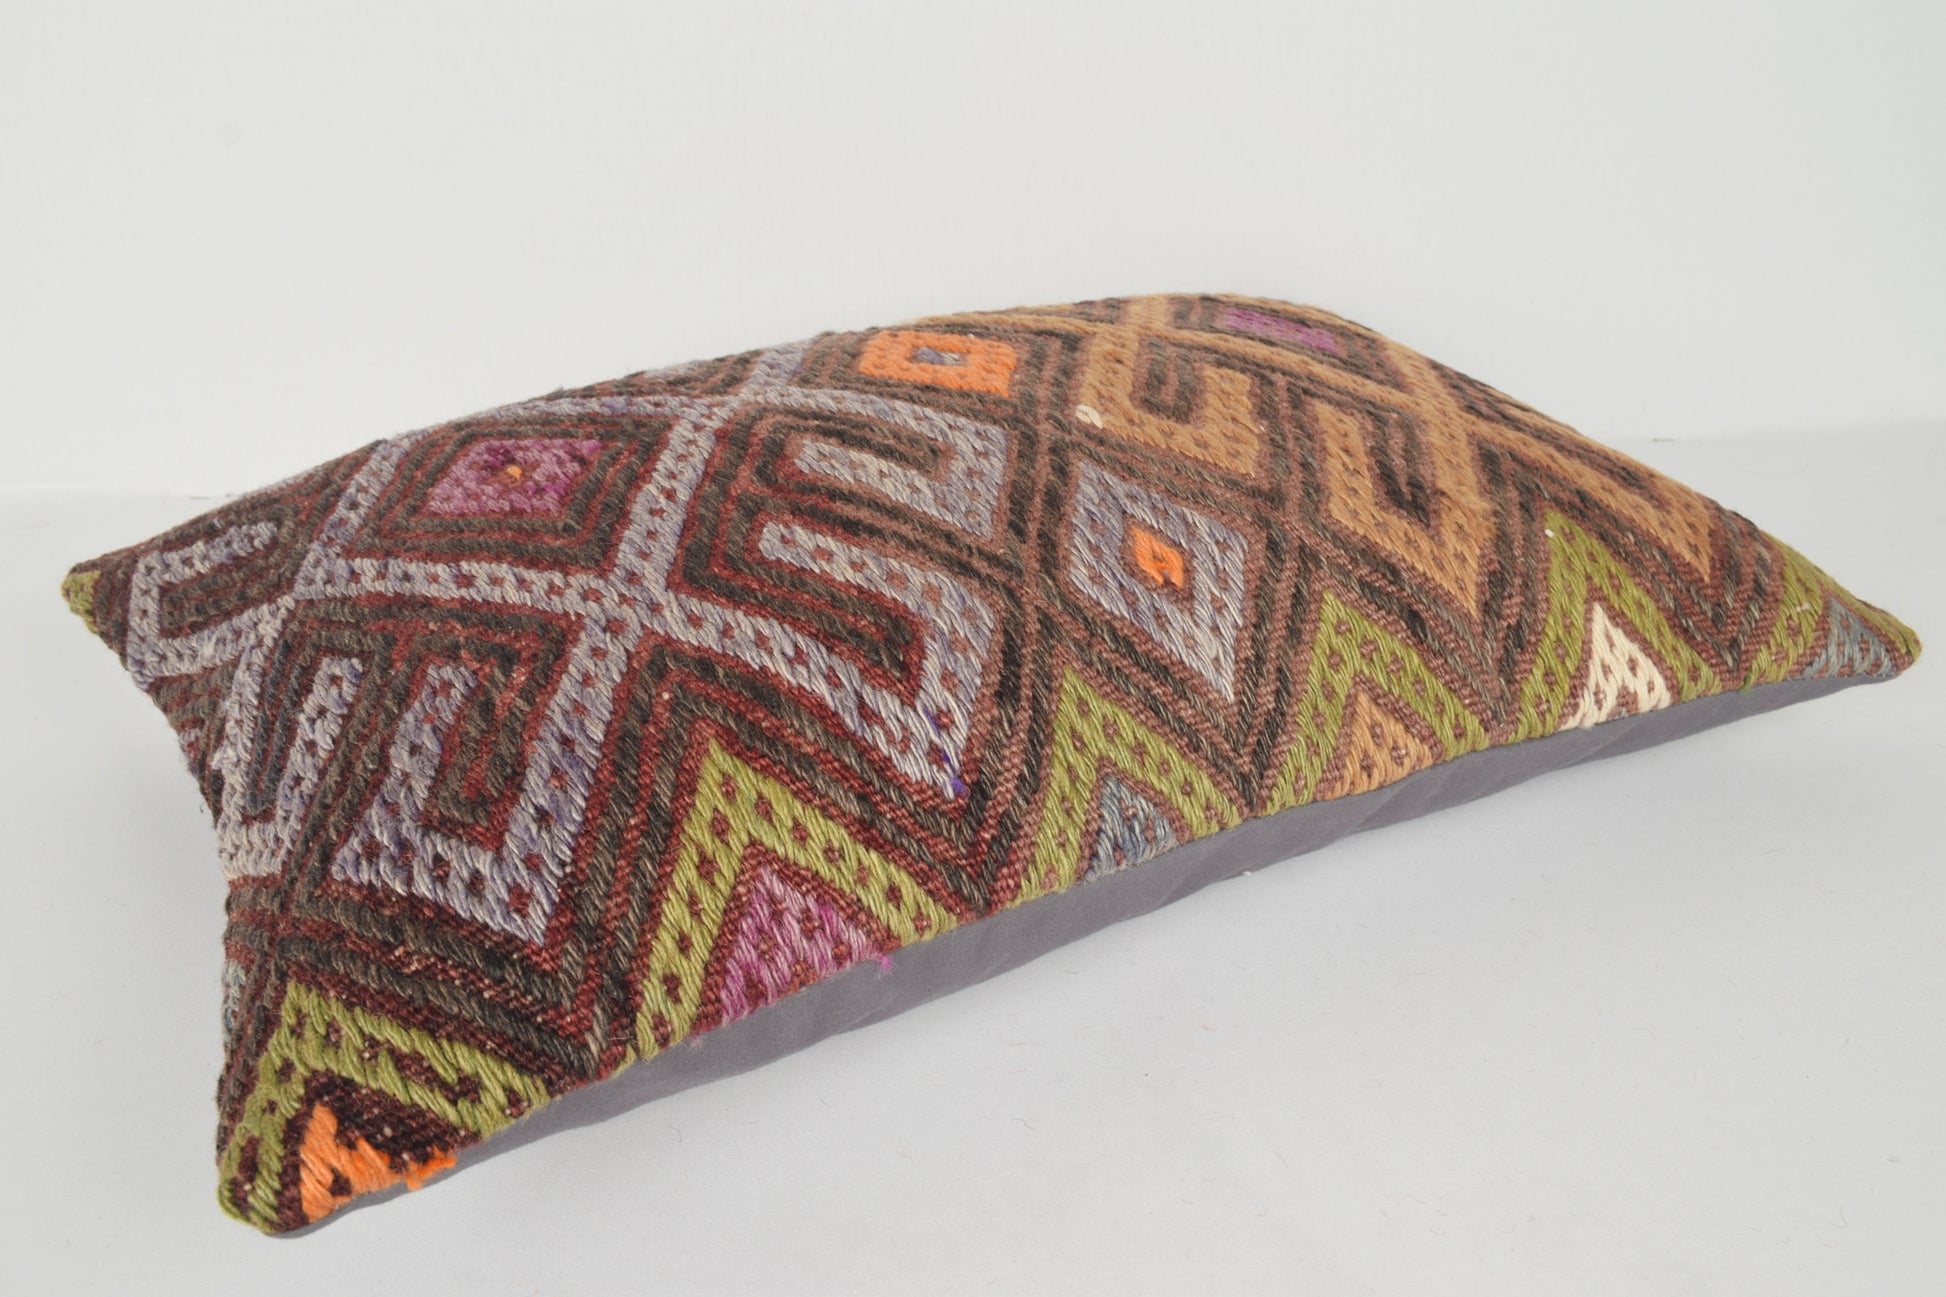 Antique Kilim Pillow Covers E00315 Lumbar Coastal Hand knot Natural House